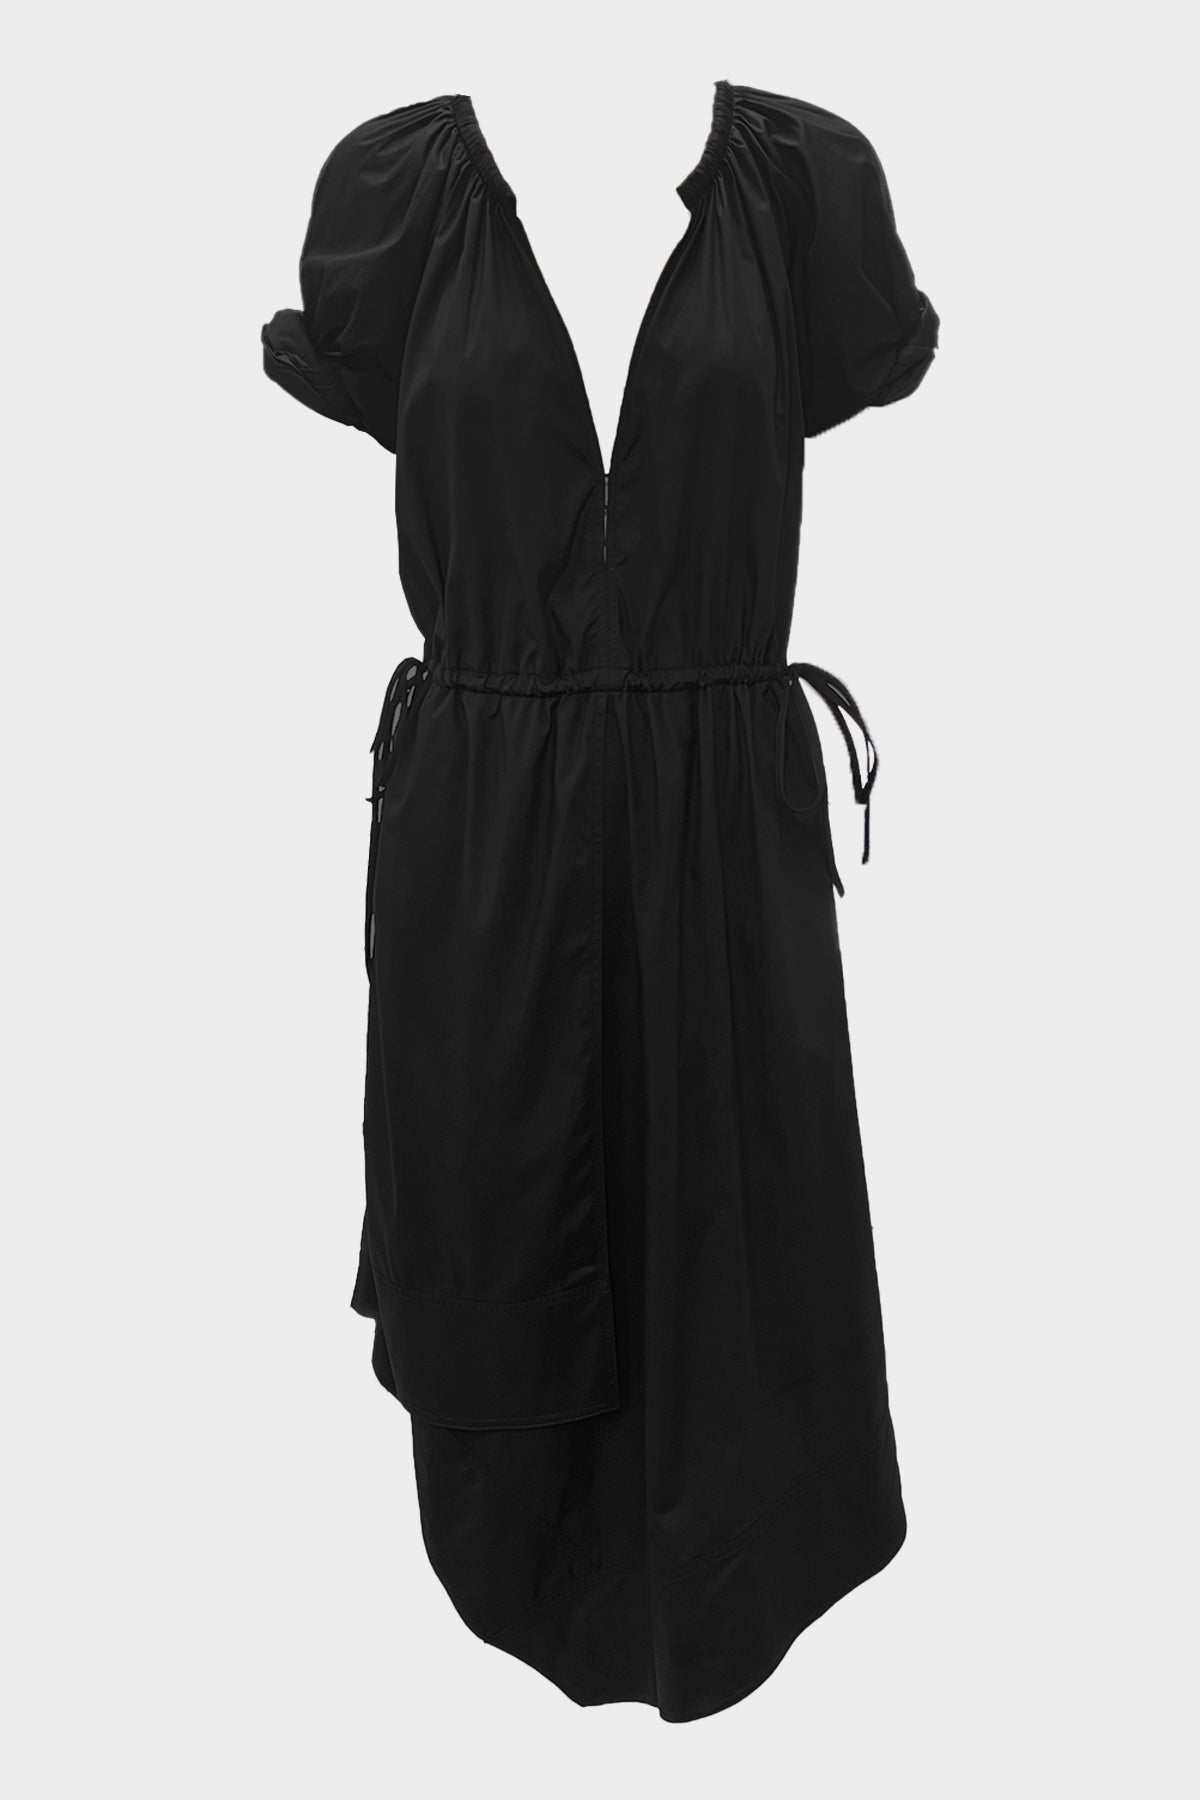 Odin Dress in Black - shop-olivia.com